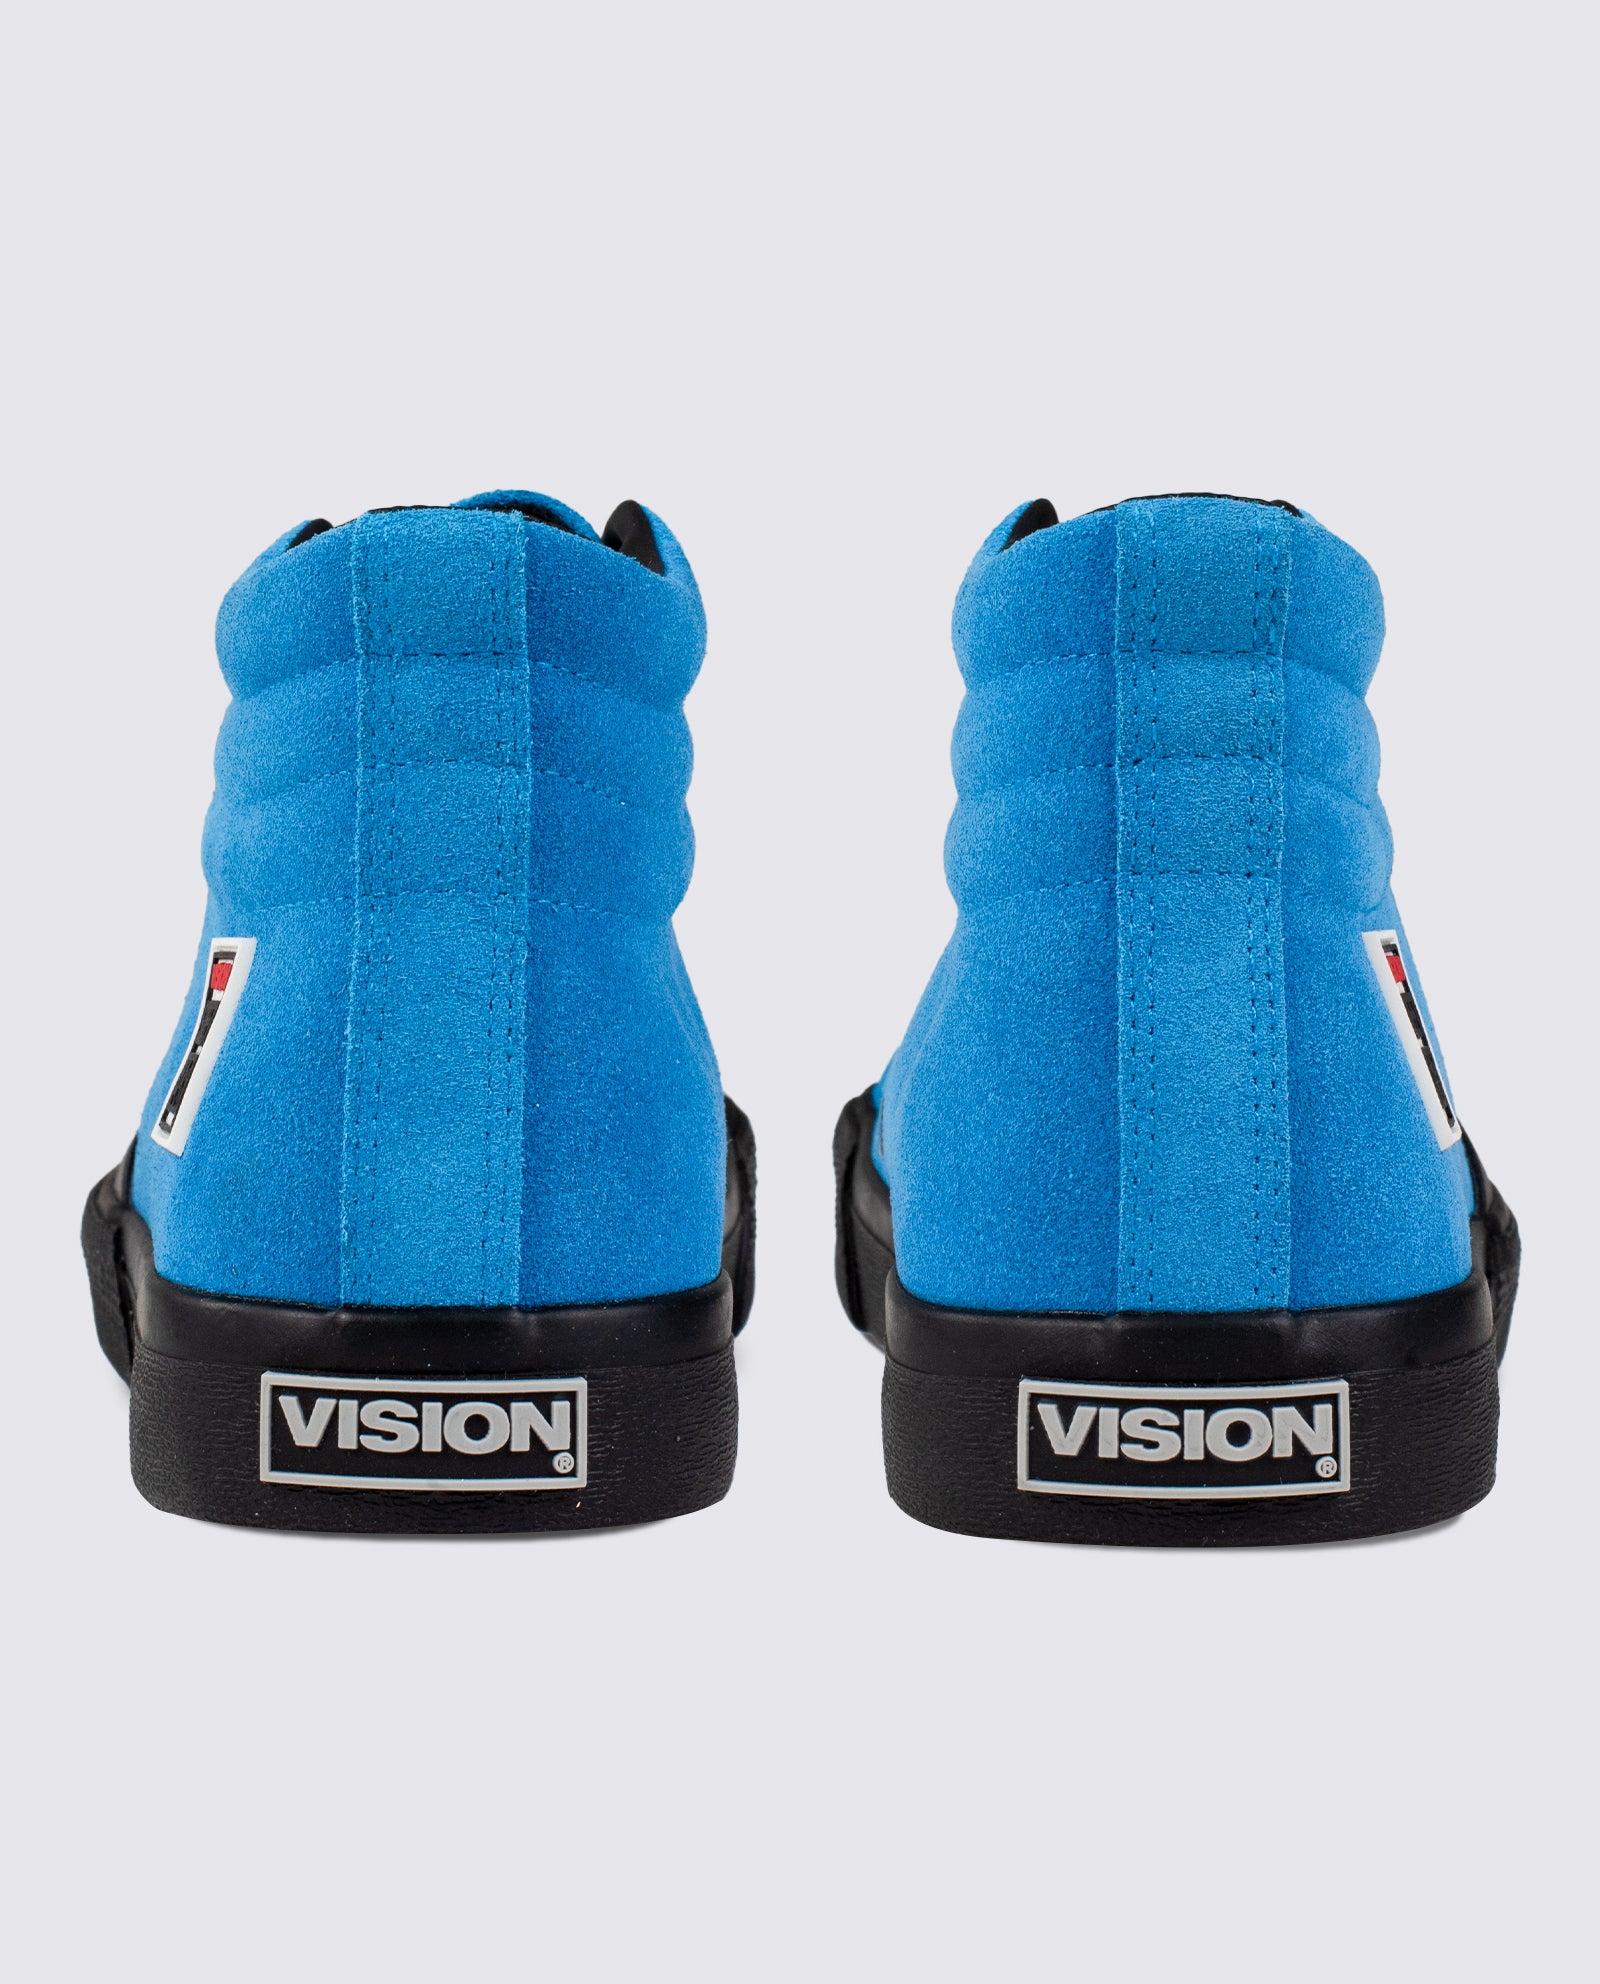 Vision Street Wear Leather Suede High Top Skateboard Sneakers Teal